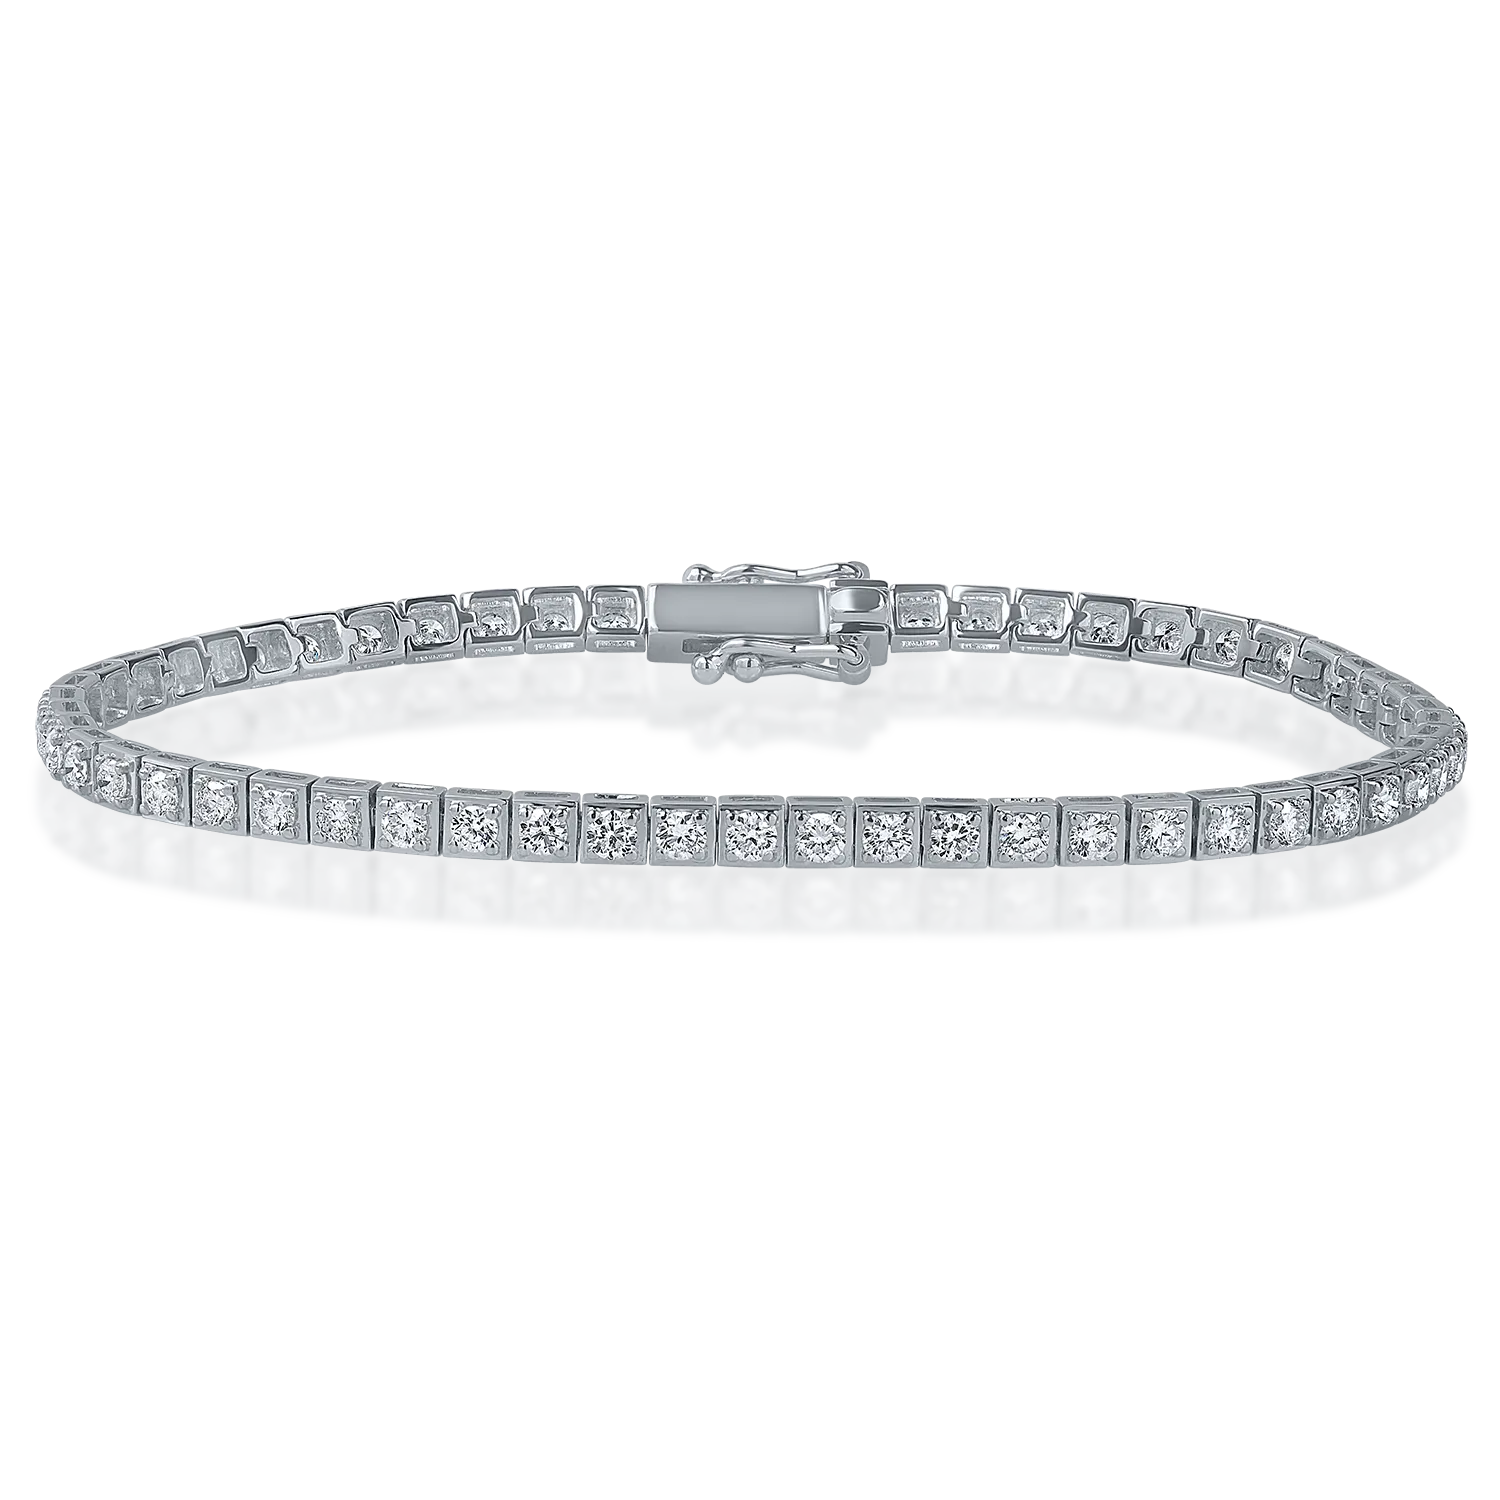 White gold tennis bracelet with 1.8ct diamonds